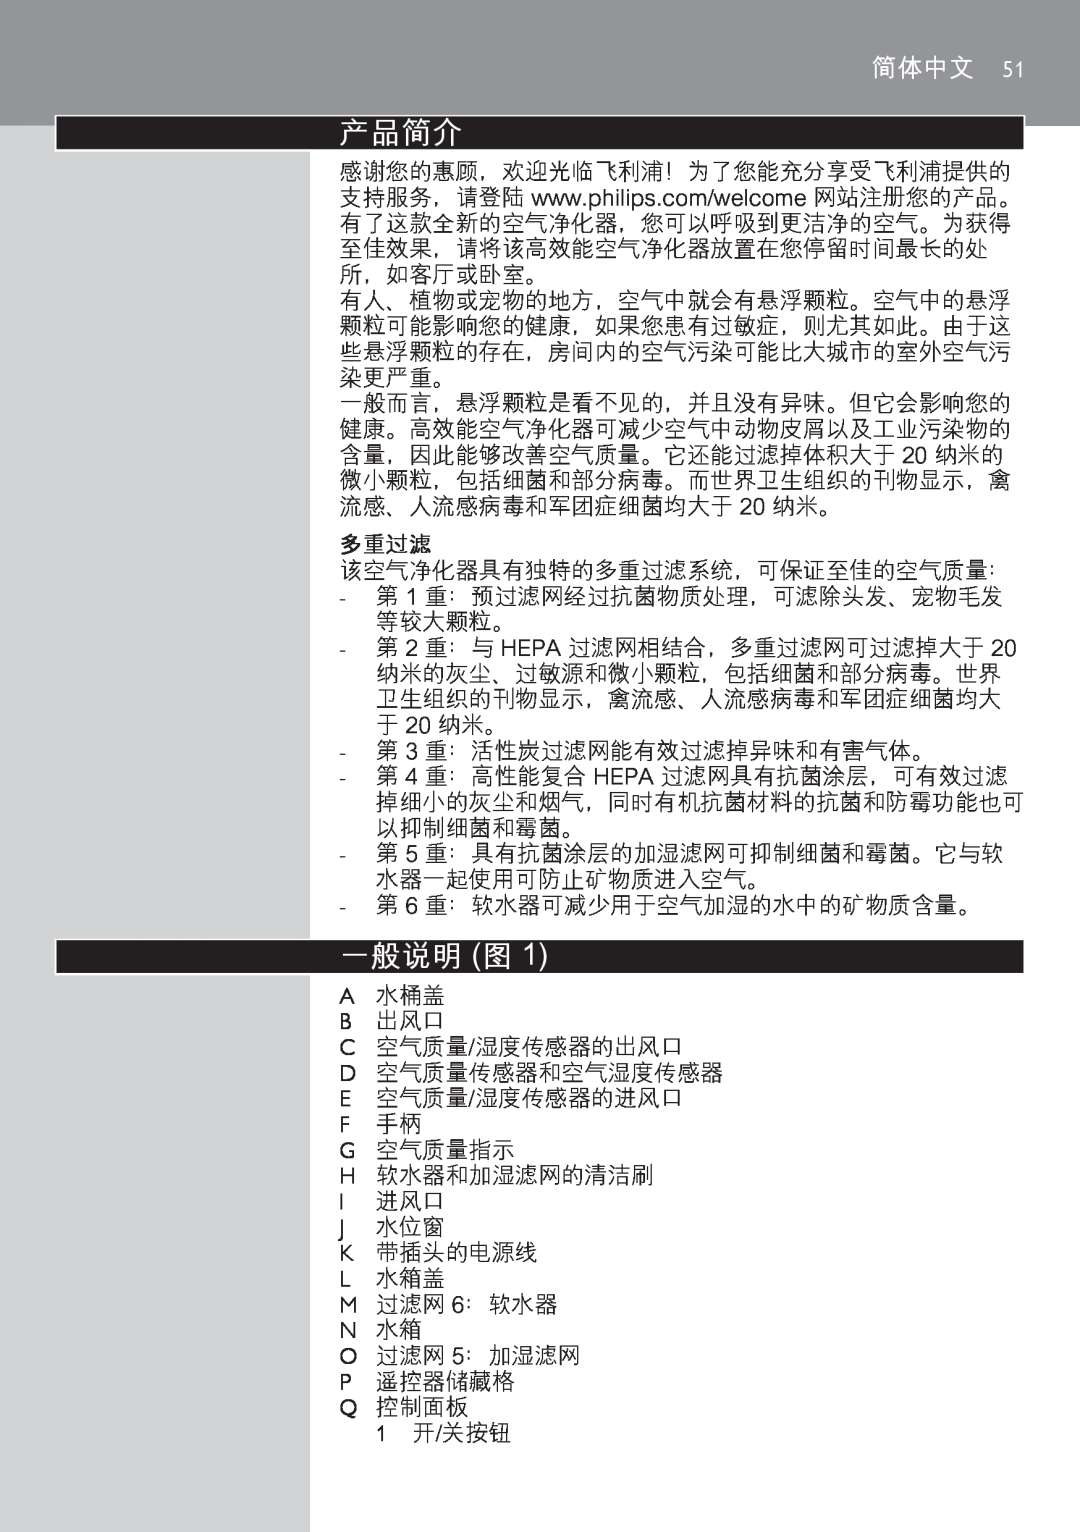 Philips AC4083 manual 产品简介, 一般说明图1, 多重过滤, 简体中文 